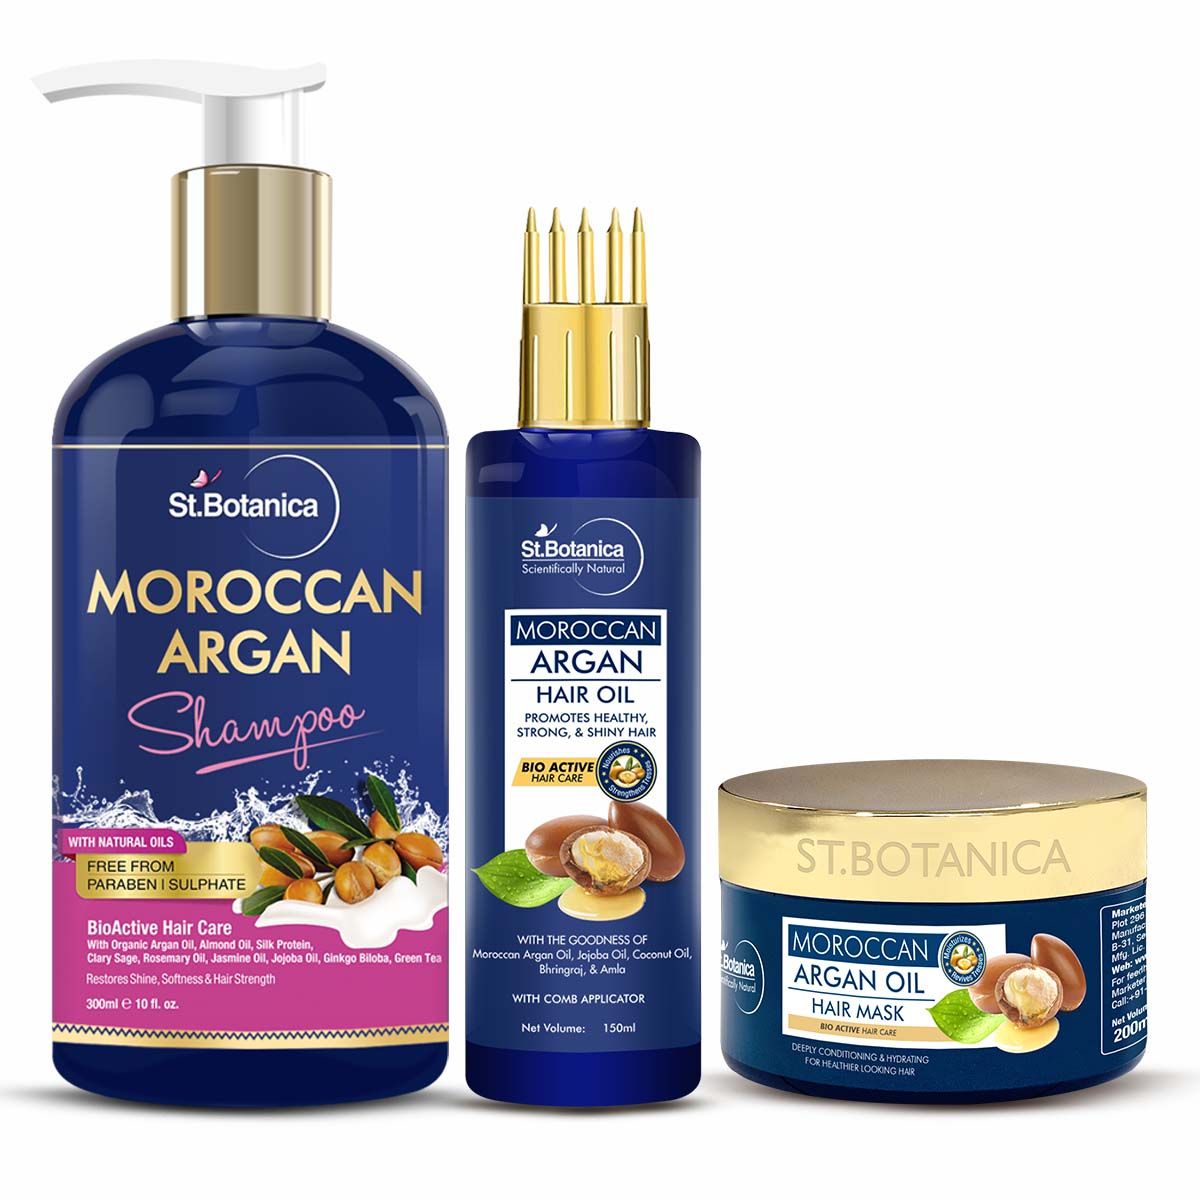 St.Botanica Moroccan Argan Shampoo + Hair Mask + Argan Hair Oil With Comb Applicator